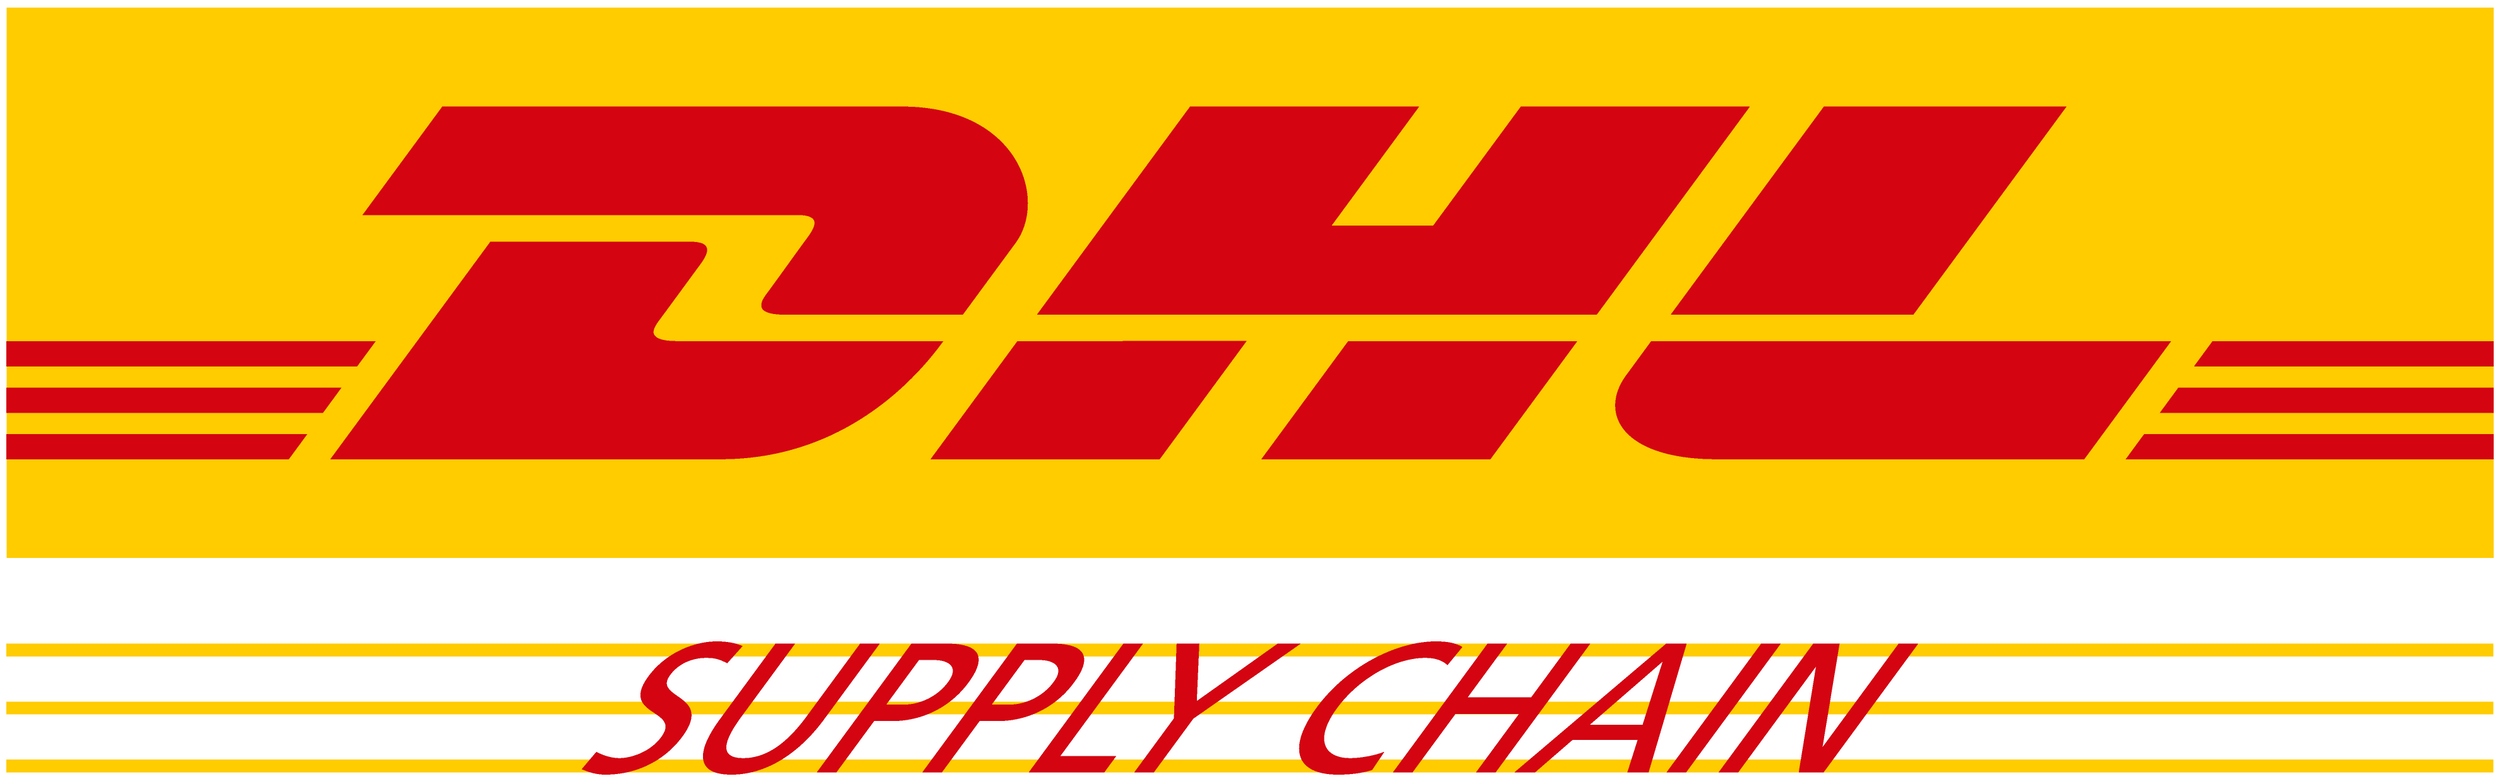 DHL_SupplyChain_logo.png